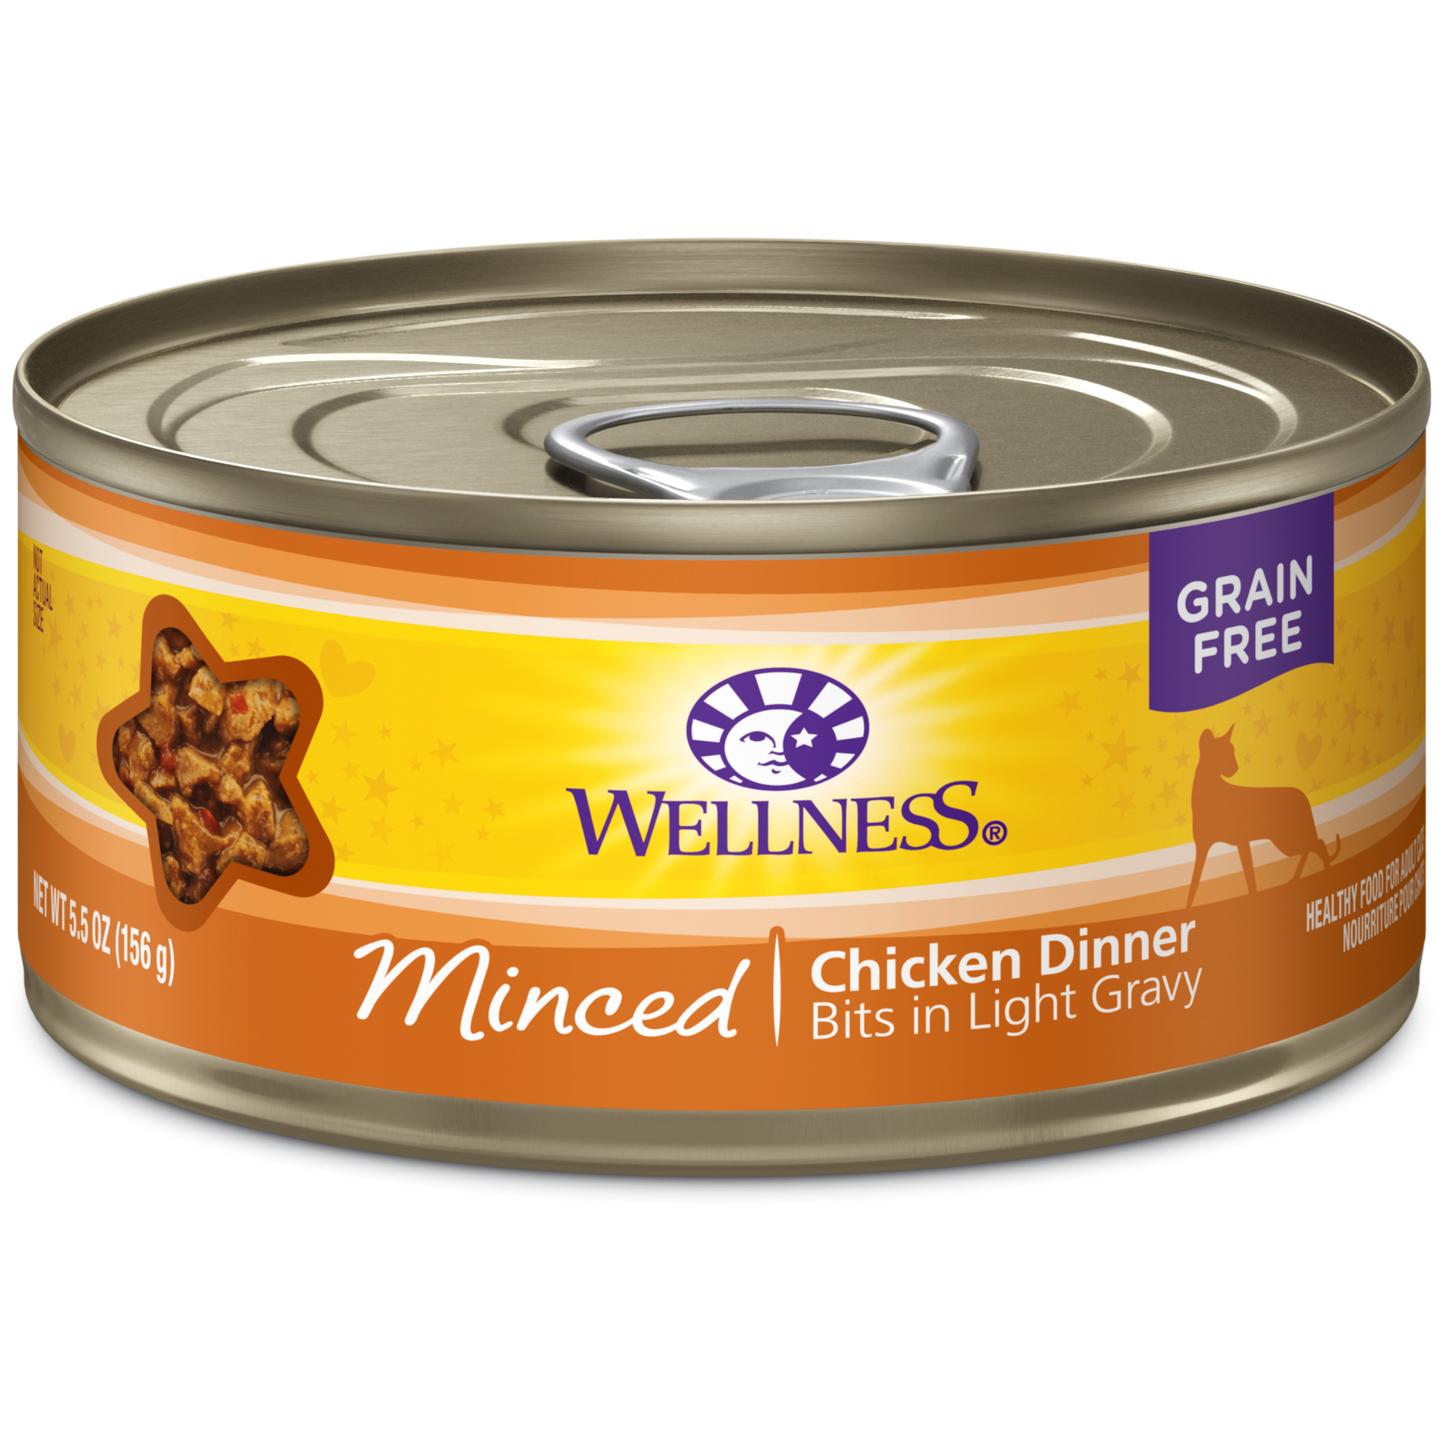 Wellness Premium Canned Cat Food | Complete Health Grain-Free Formula | Minced Chicken Dinner in Gravy Recipe